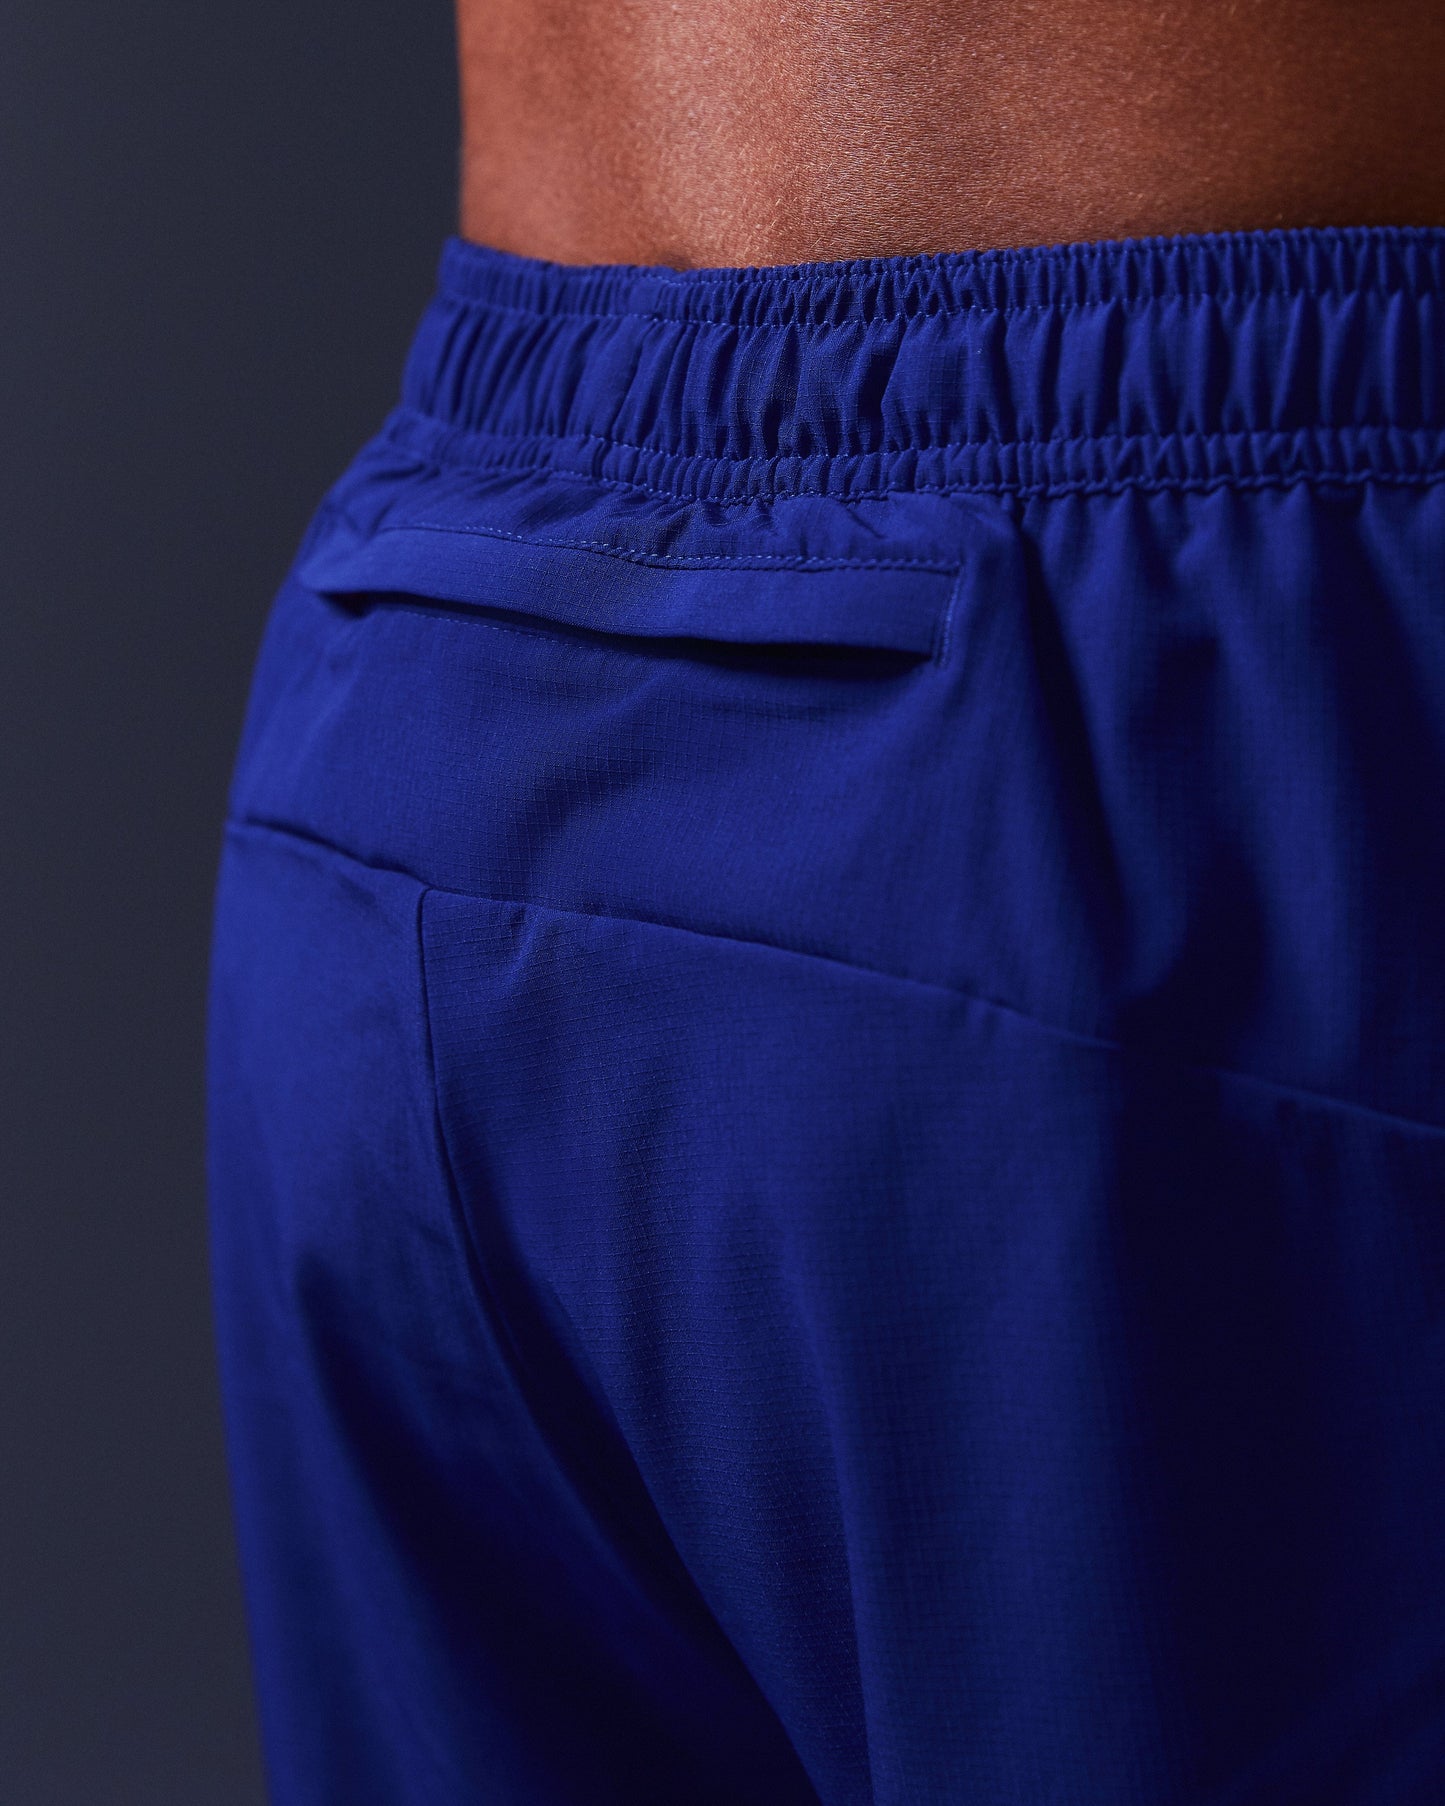 SUDU SRP 01 Run Pants - Belleweather Blue / Carmine Rose Pants